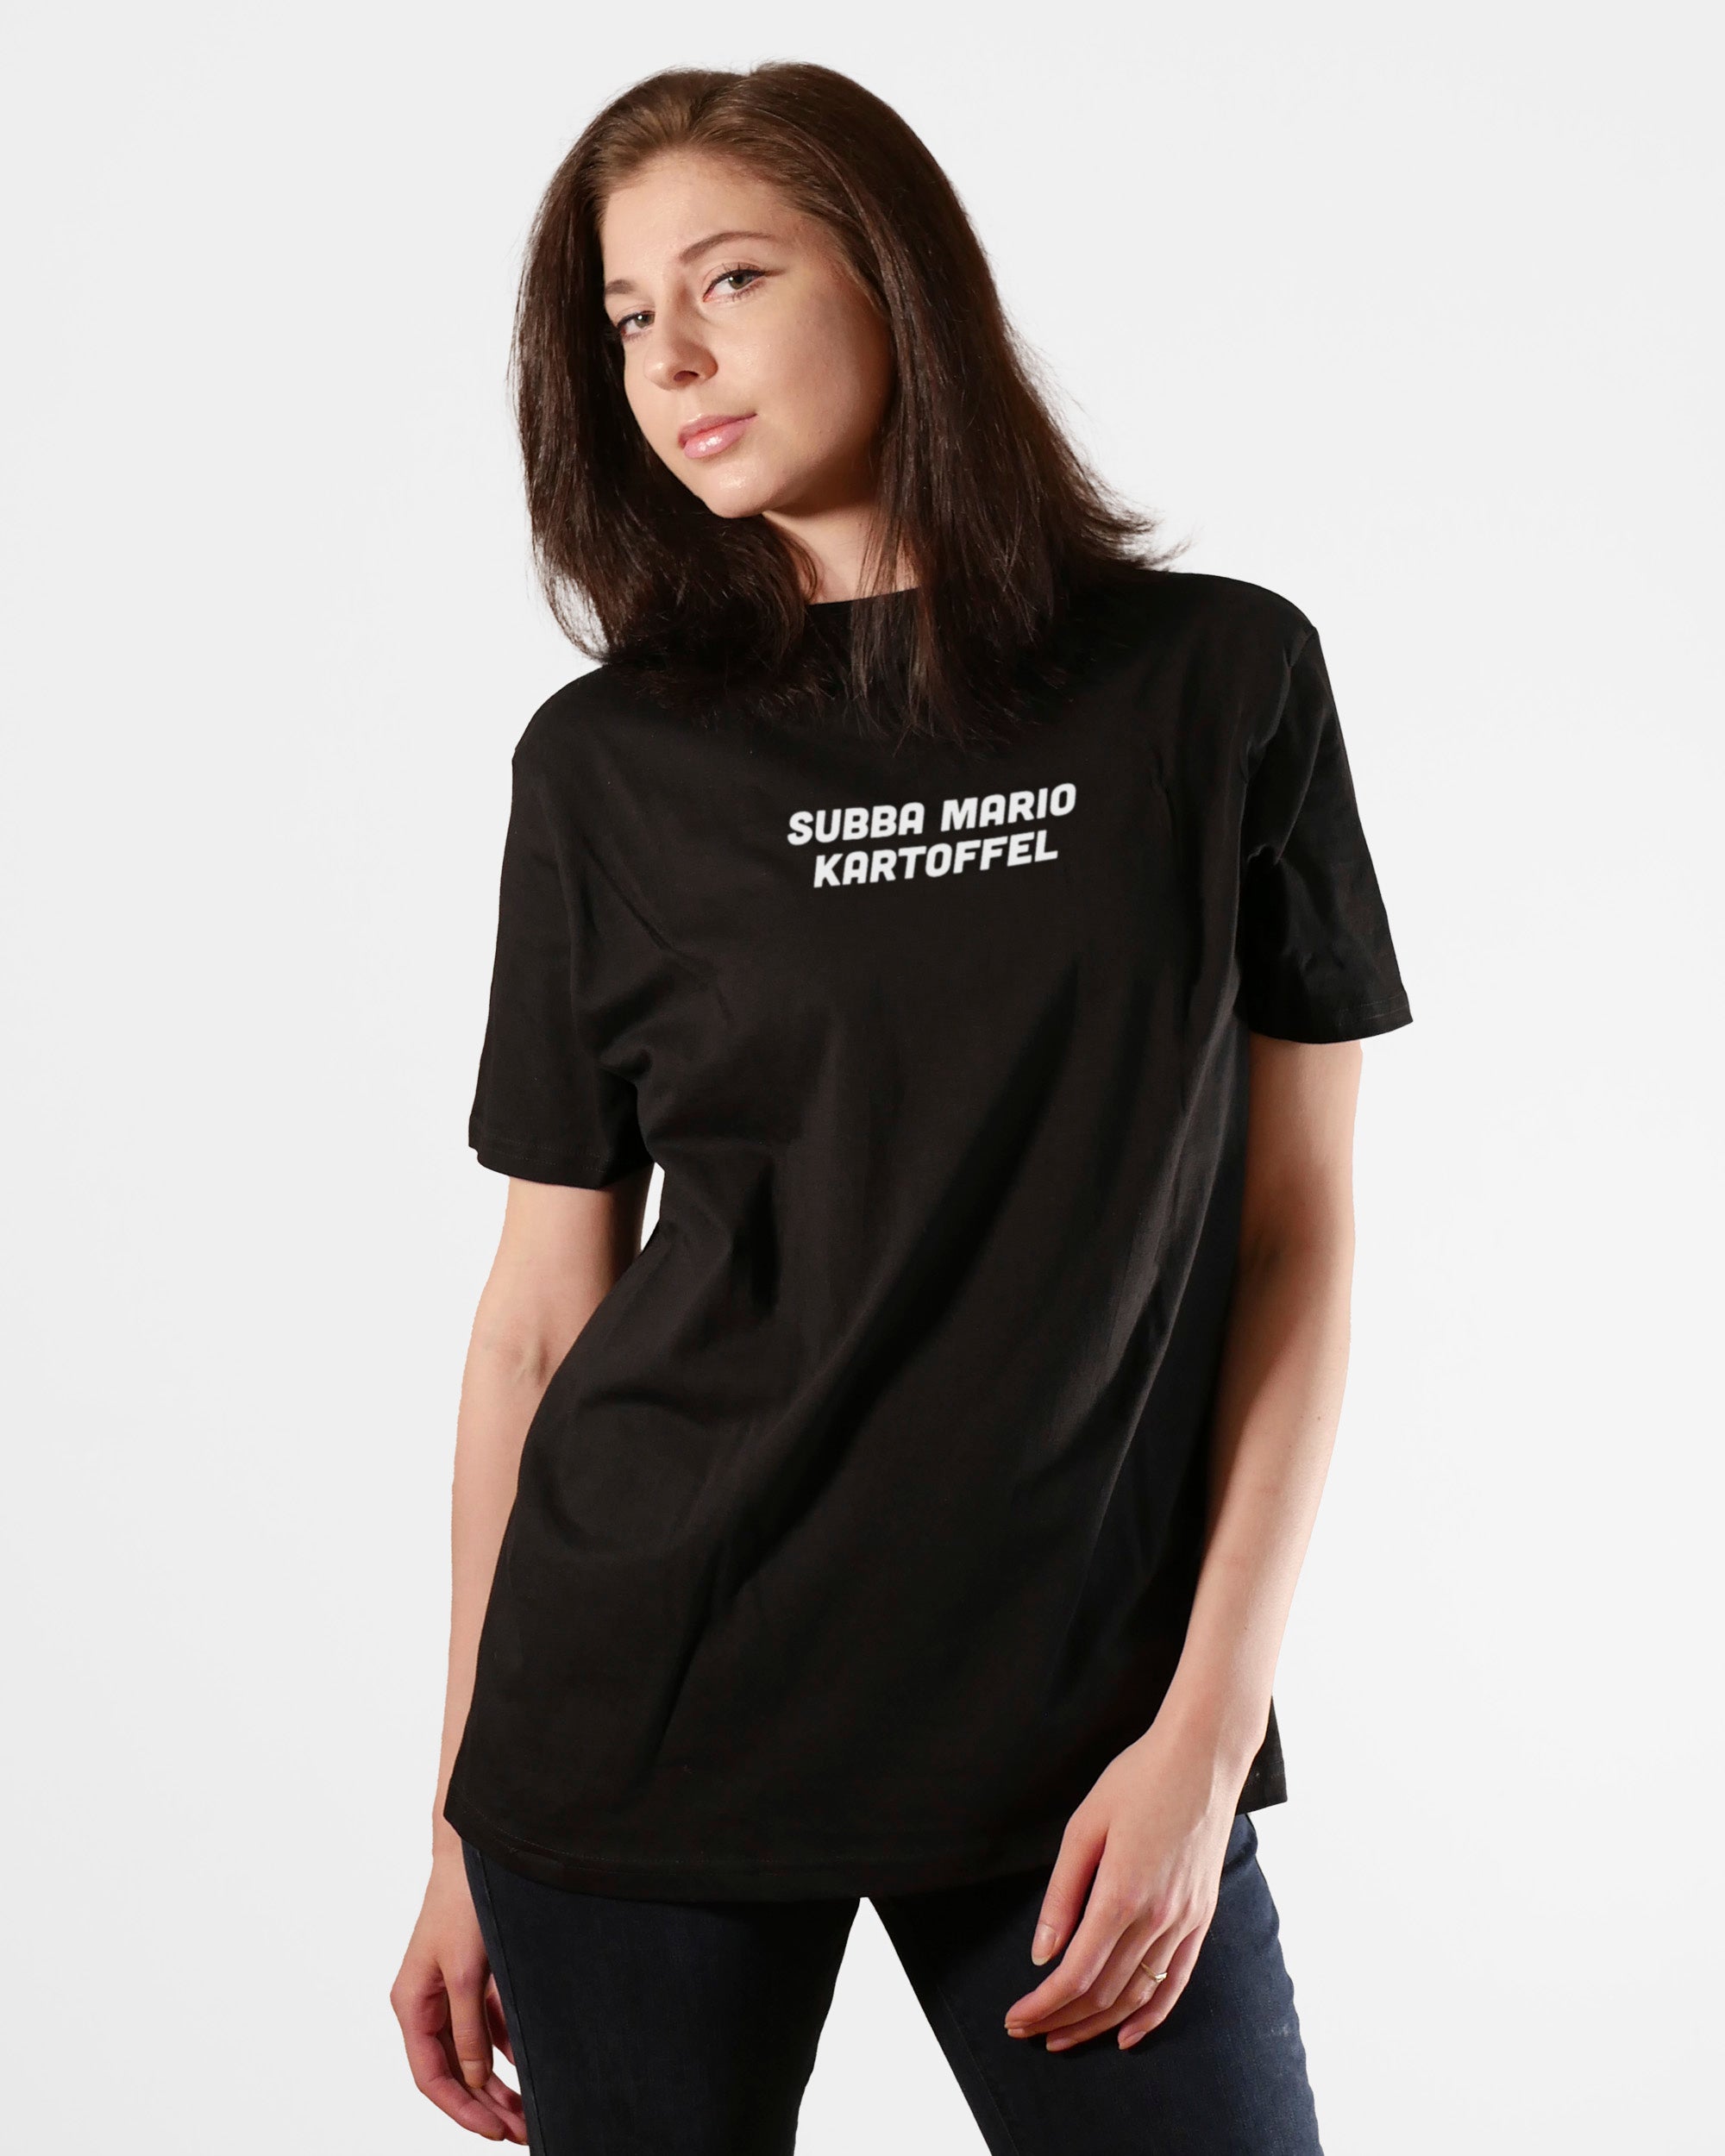 Subba Mario Kartoffel | 3-Style T-Shirt